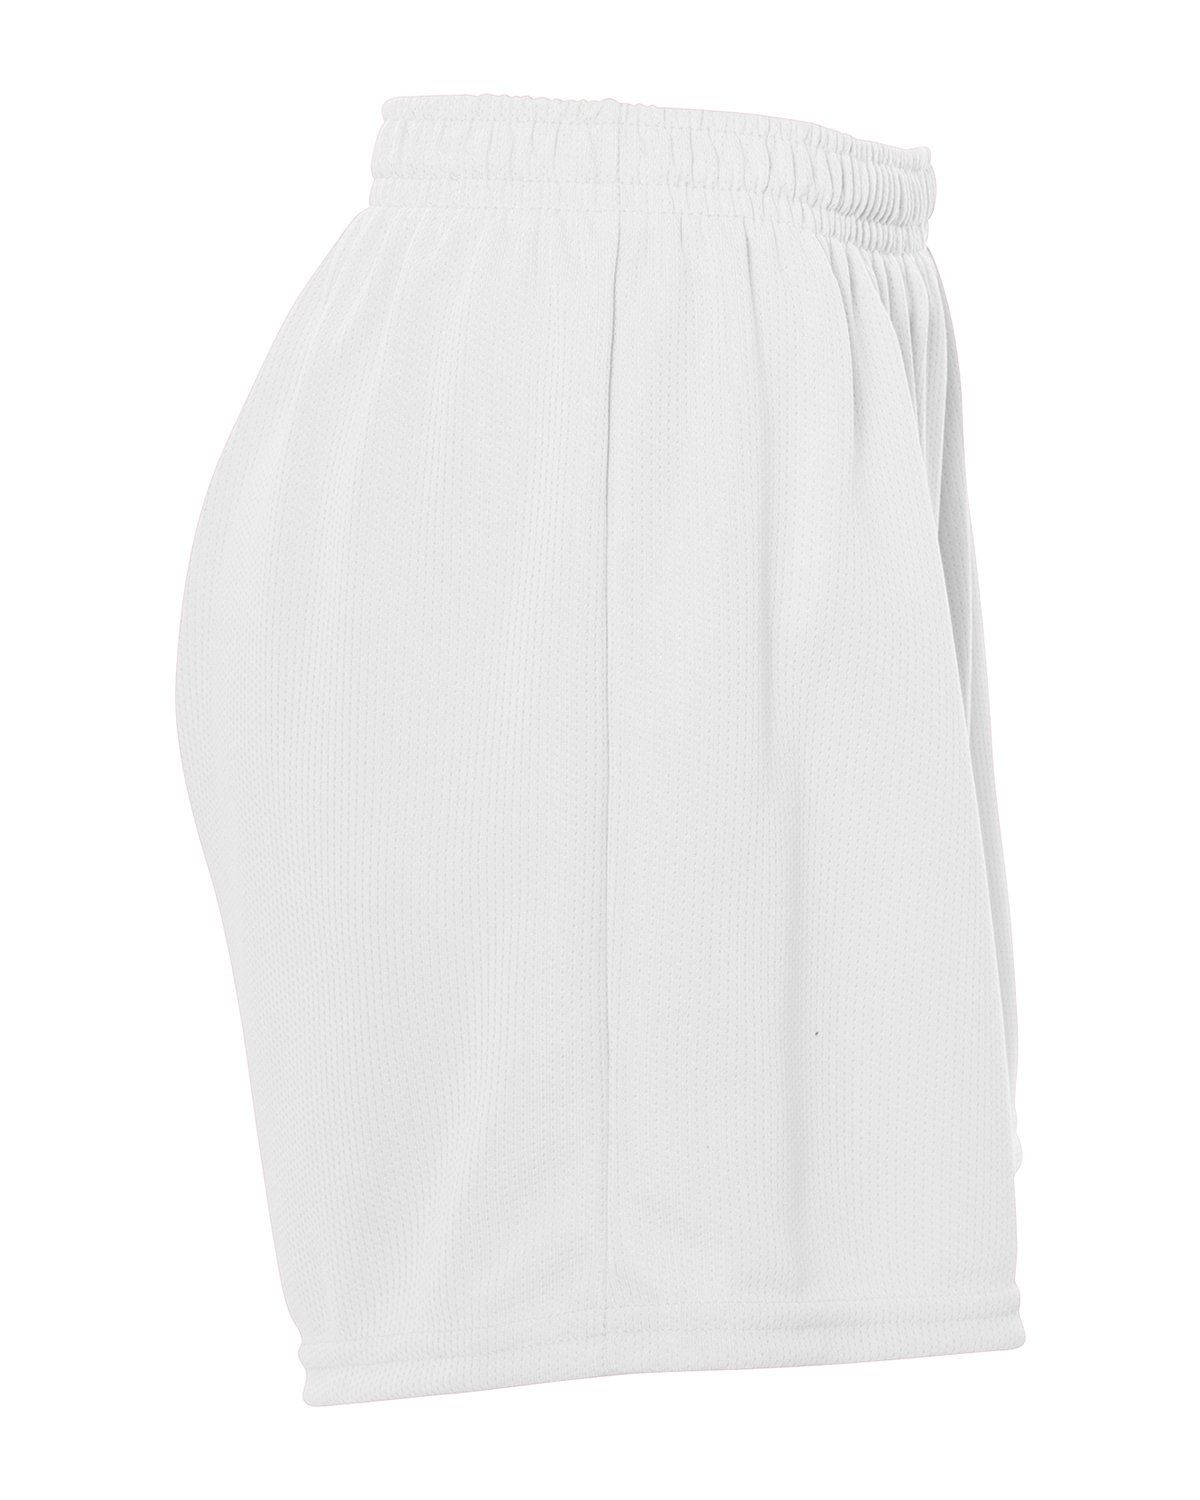 'Augusta Sportswear 960 Ladies Wicking Mesh Short'